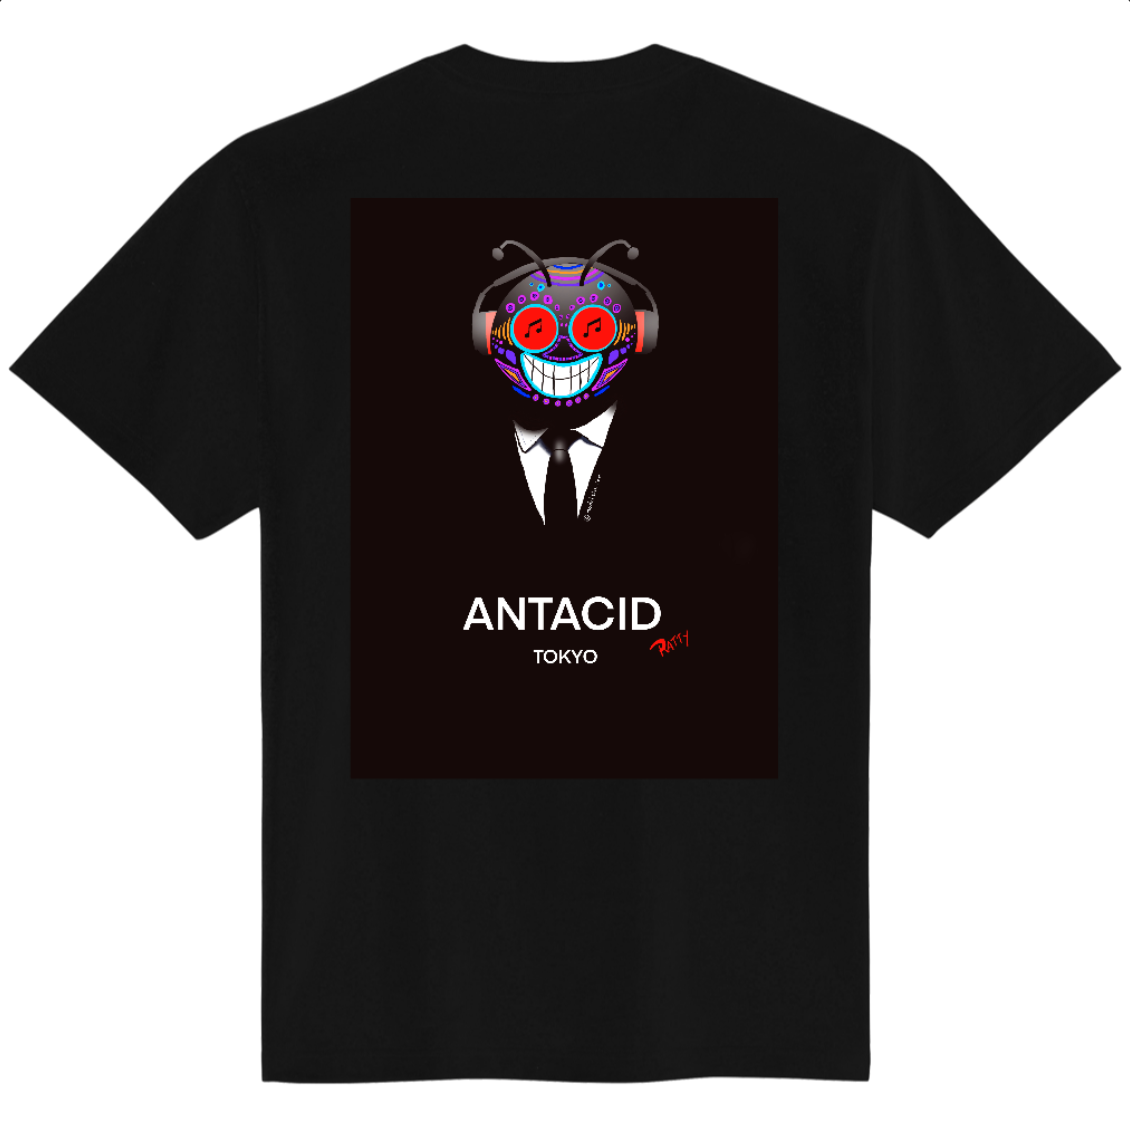 Tokyo-Antacid-black-t-shirt-ratty-rob-mathews-modelstix.png